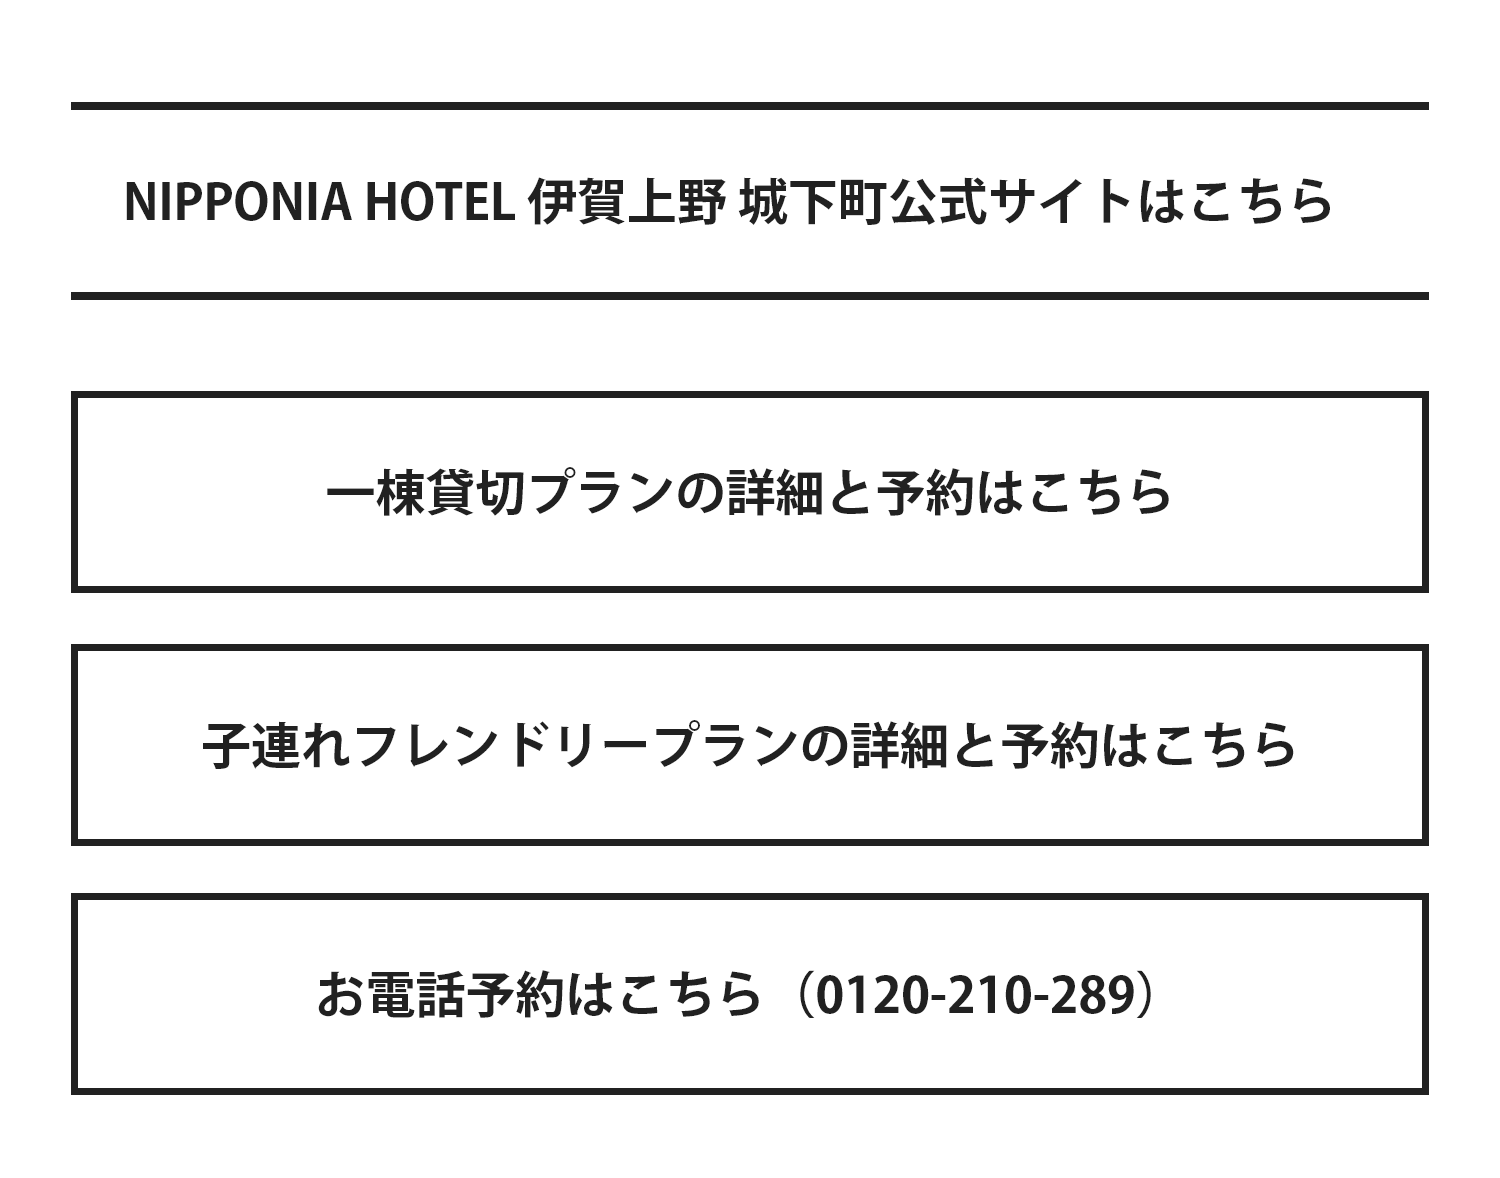 NIPPONIA HOTEL 伊賀上野 城下町 公式サイト・プラン詳細とご予約・お電話予約